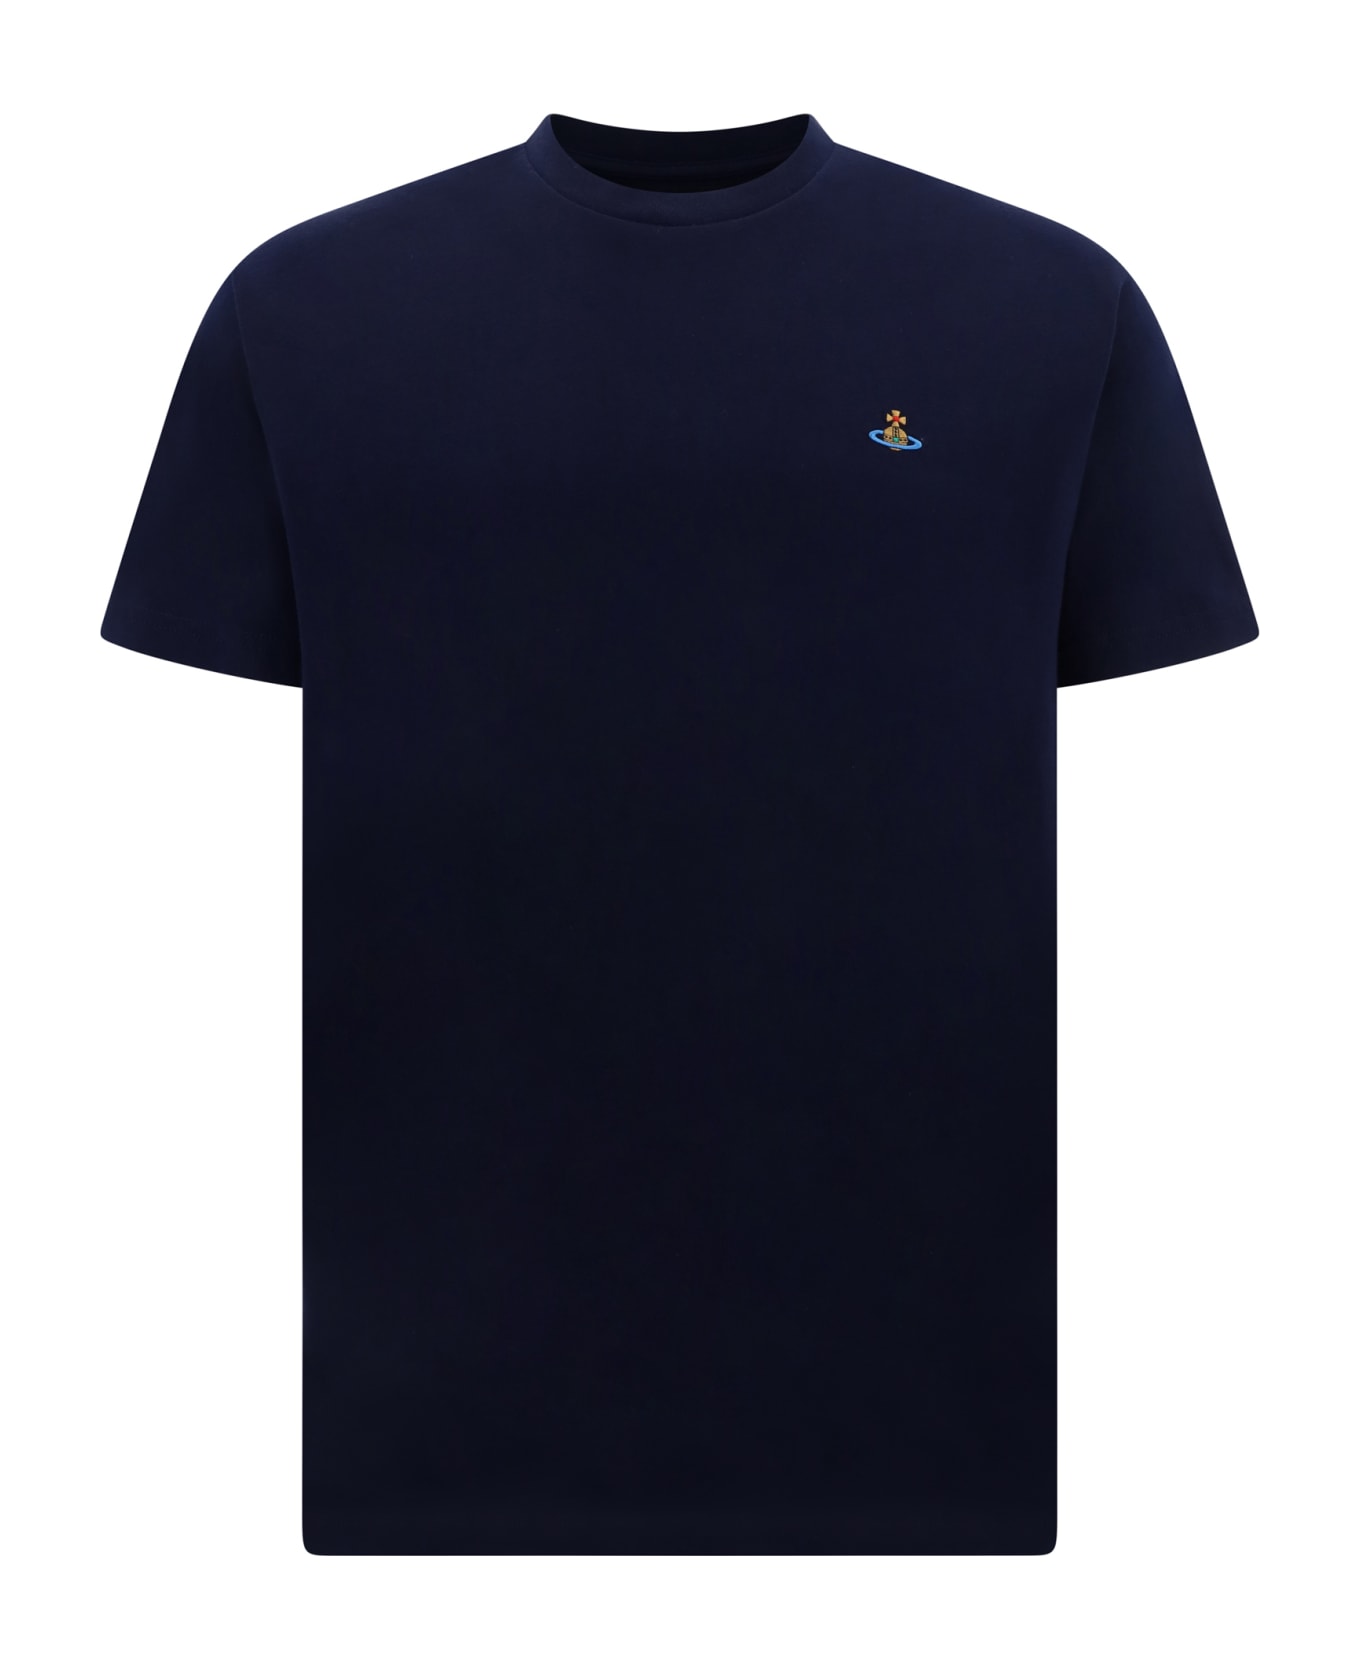 Vivienne Westwood T-shirt - Navy